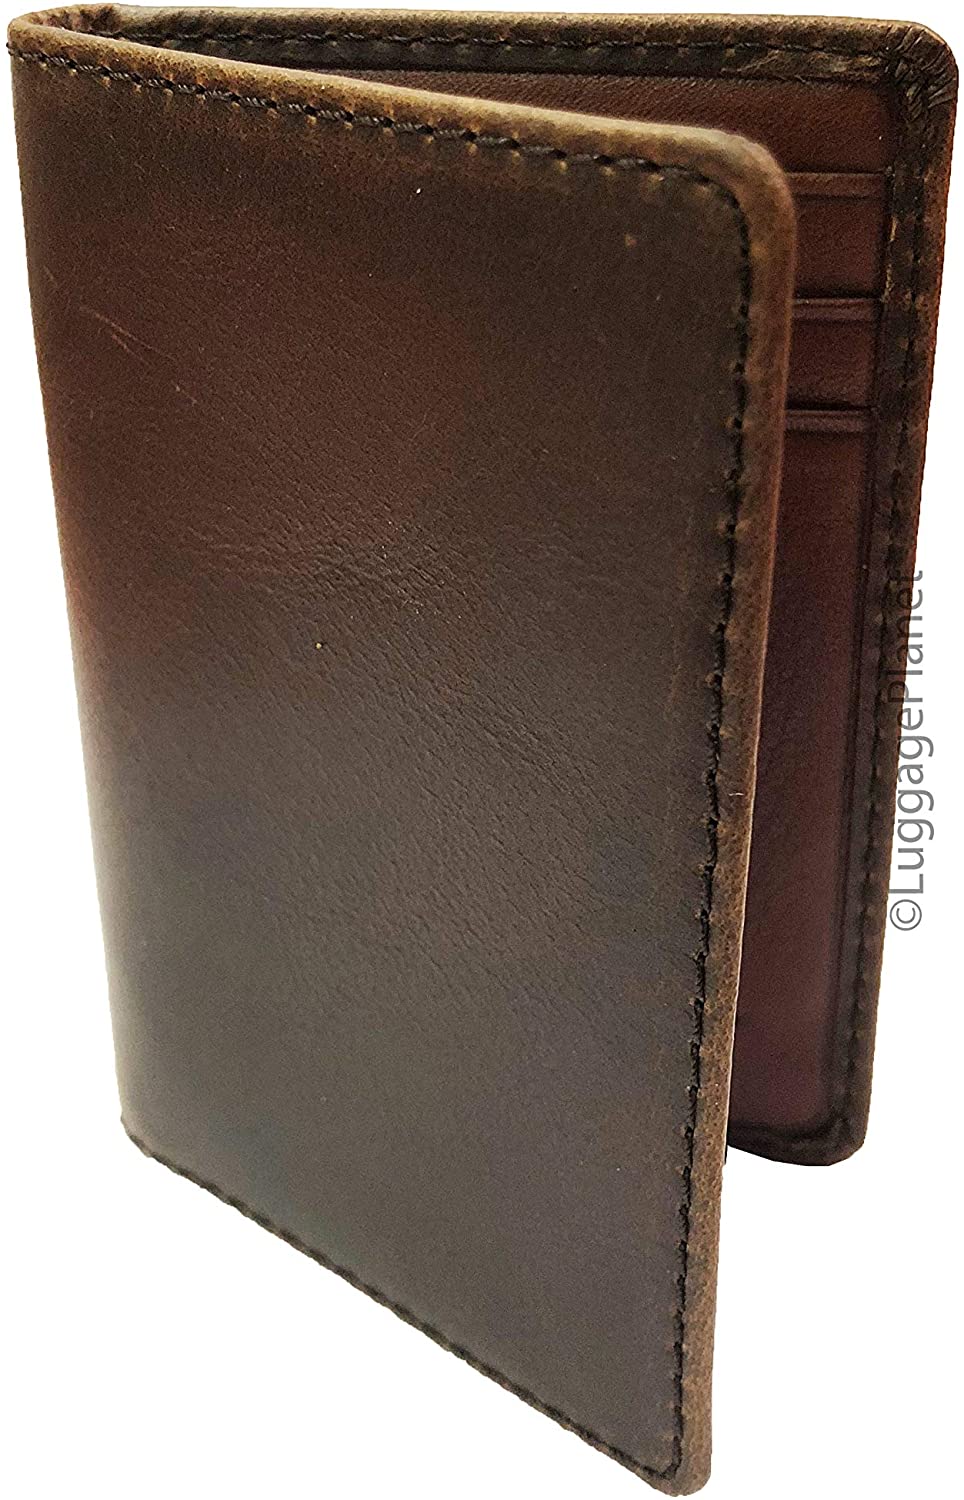 Osgoode Marley RFID 8 Pocket Bifold Credit Card Mens Leatehr Wallet - Distressed 1308